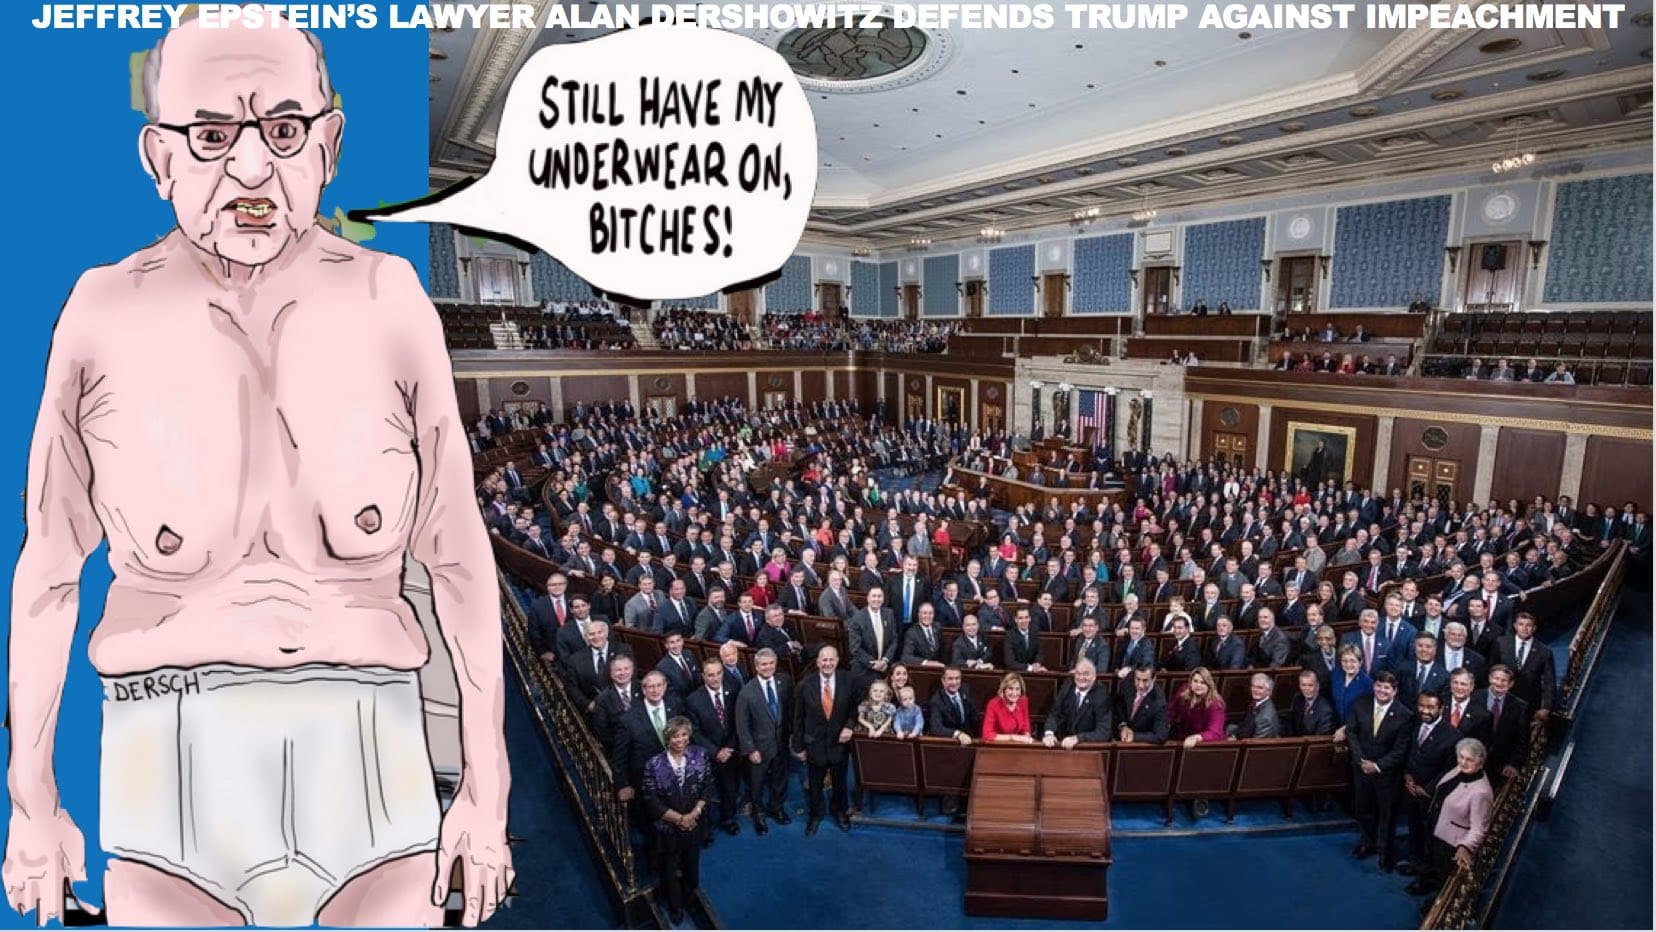 Alan Dershowitz to Senators: “Keep Your Underwear on and Acquit Trump—OR ELSE ...